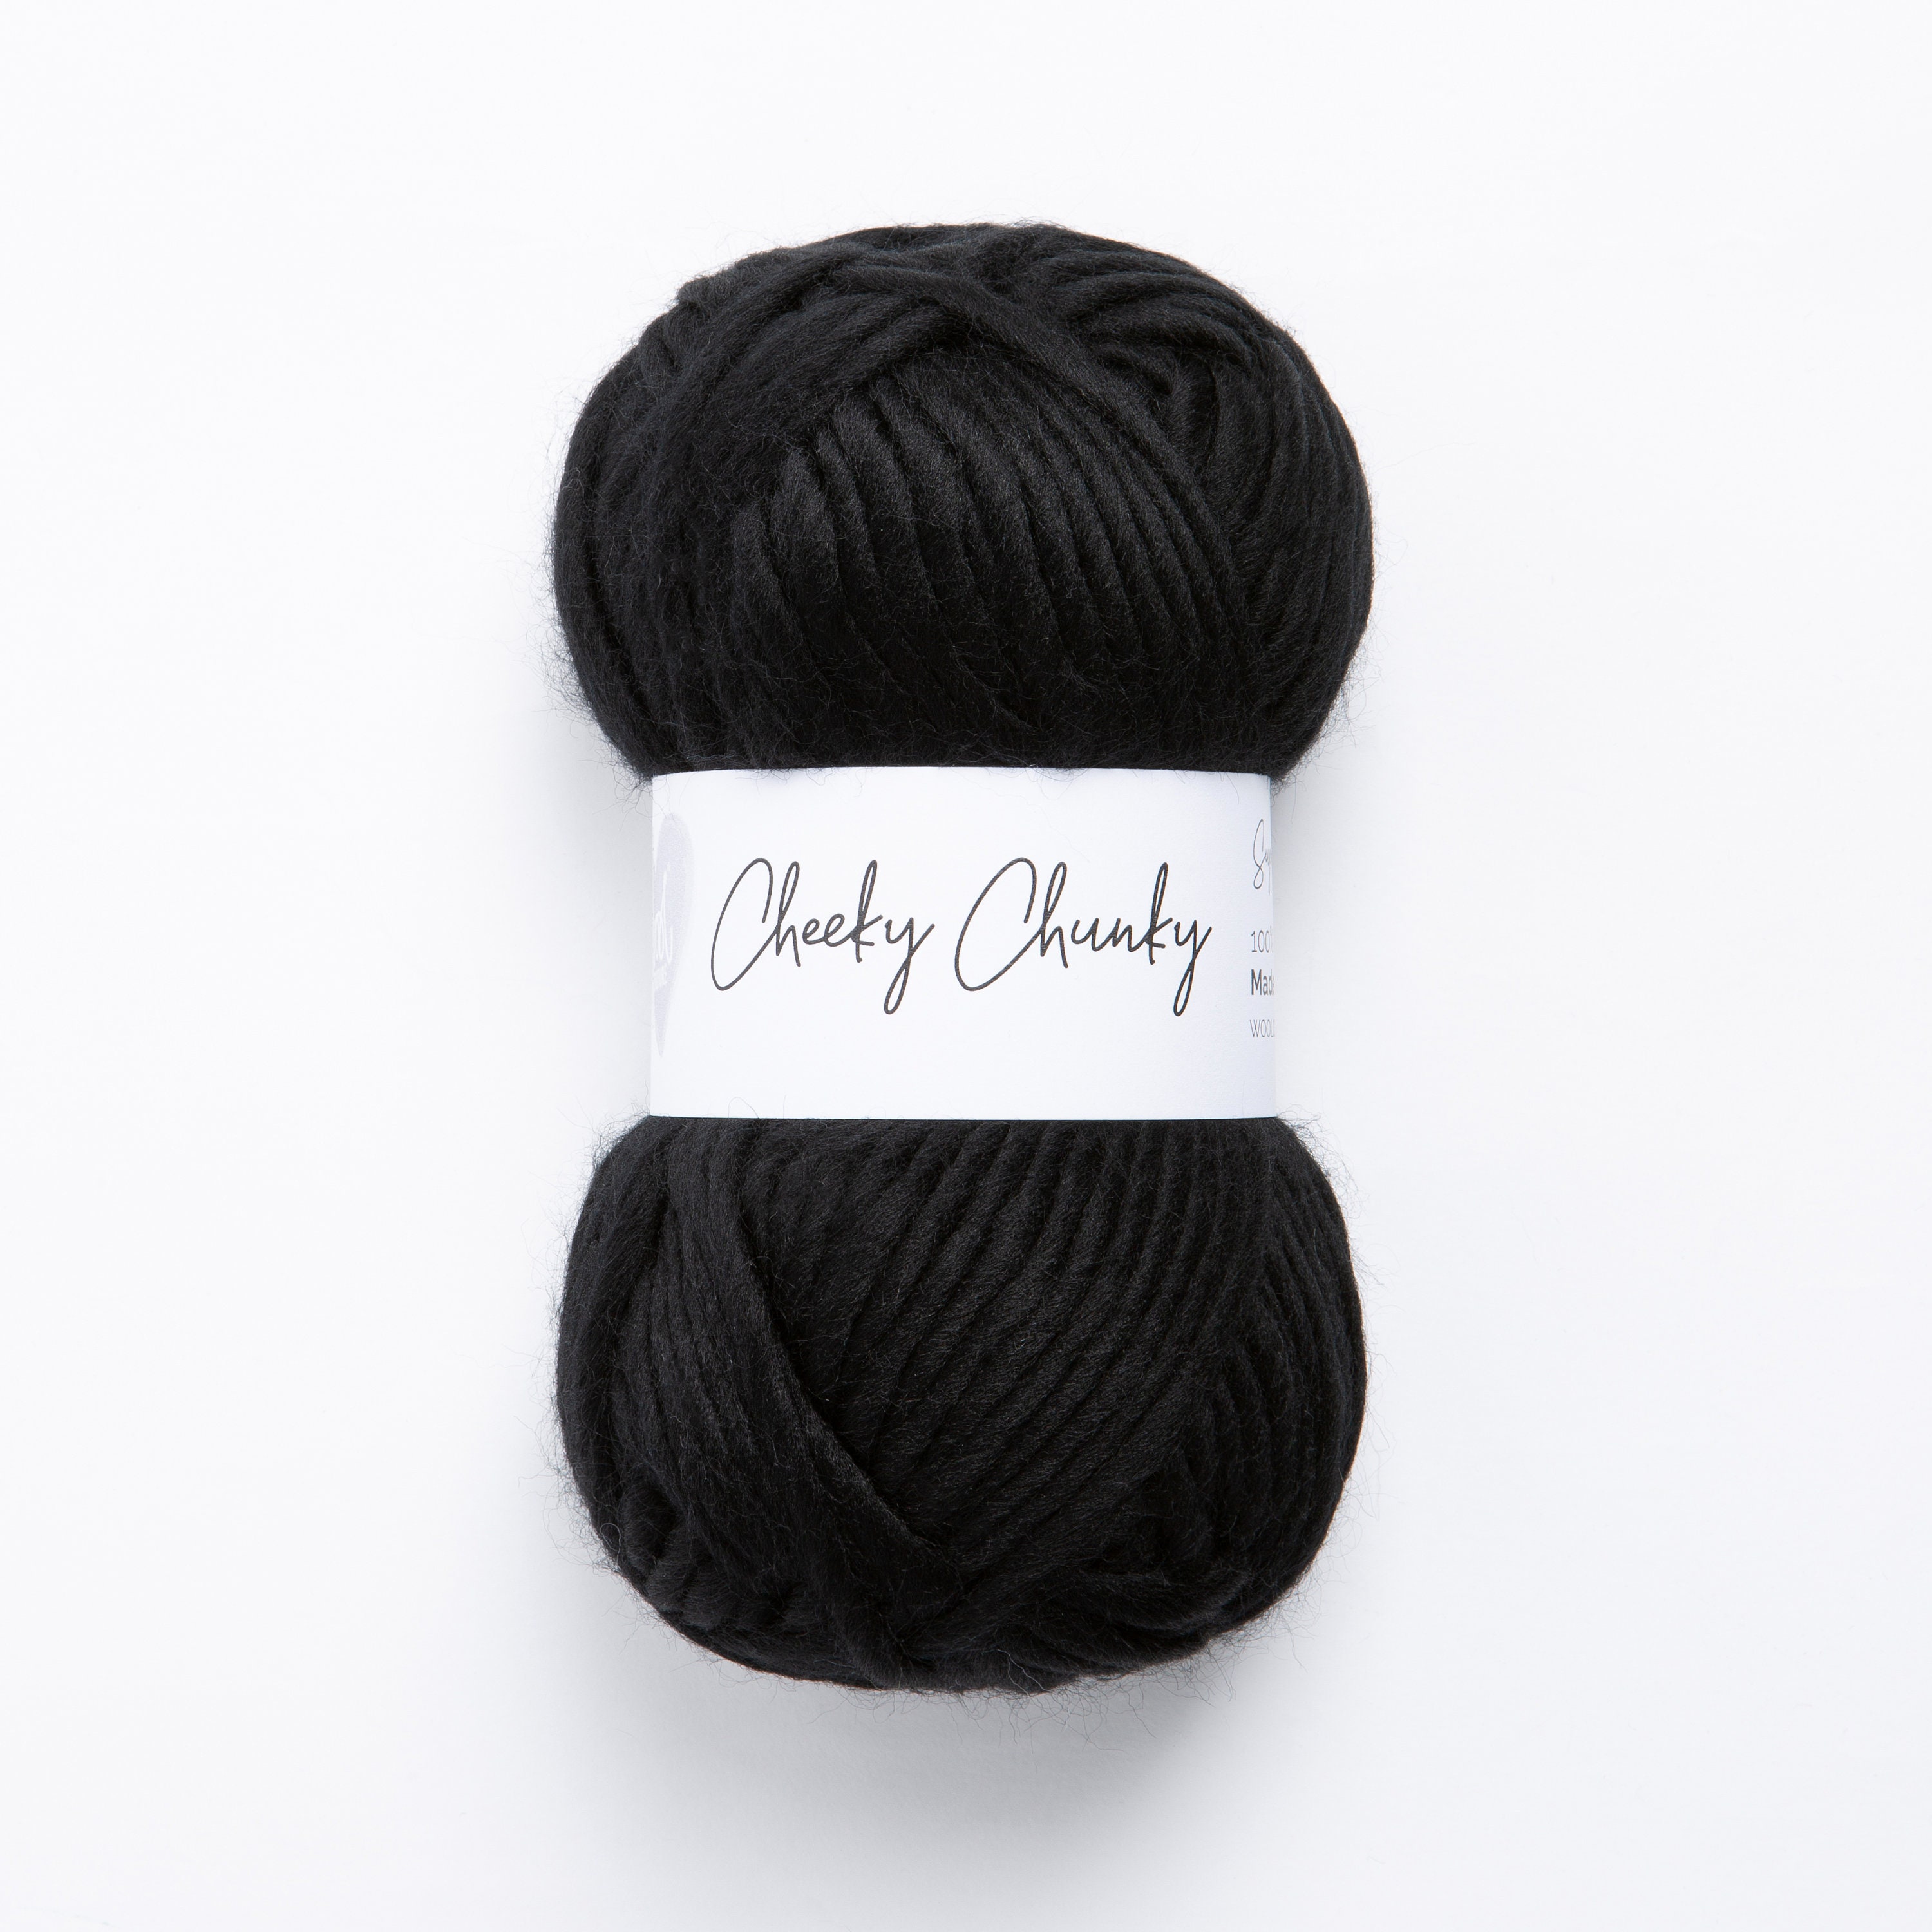 Black Super Chunky Yarn. Cheeky Chunky Yarn by Wool Couture. 100g Ball Chunky  Yarn in Black Charcoal Pure Merino Wool. 